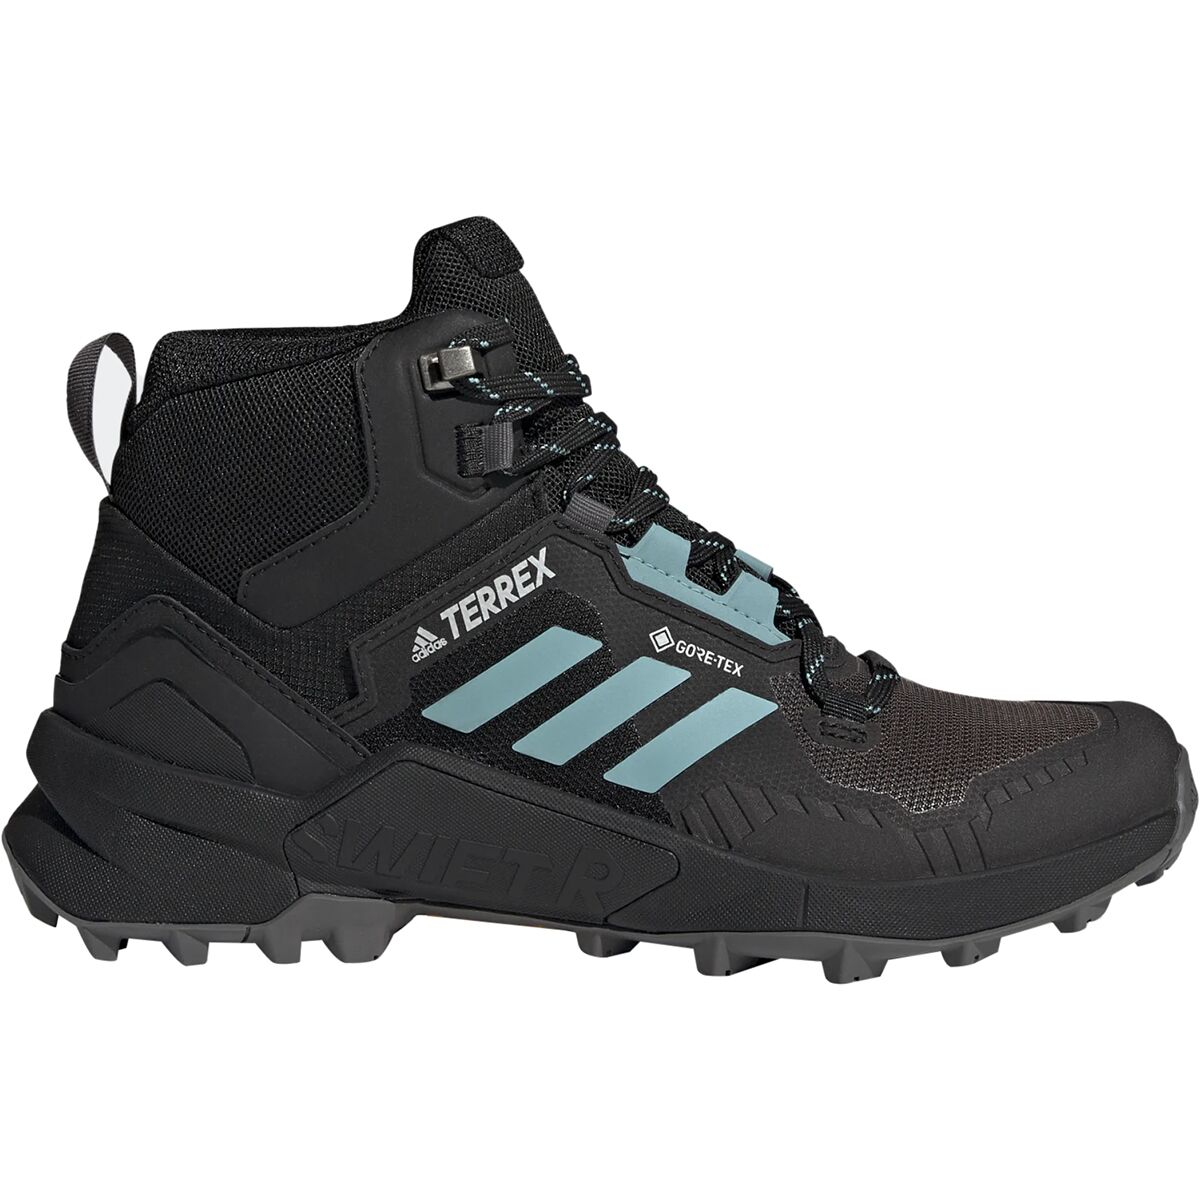 Adidas Terrex Swift R3 Mid GTX Hiking Boot - Footwear